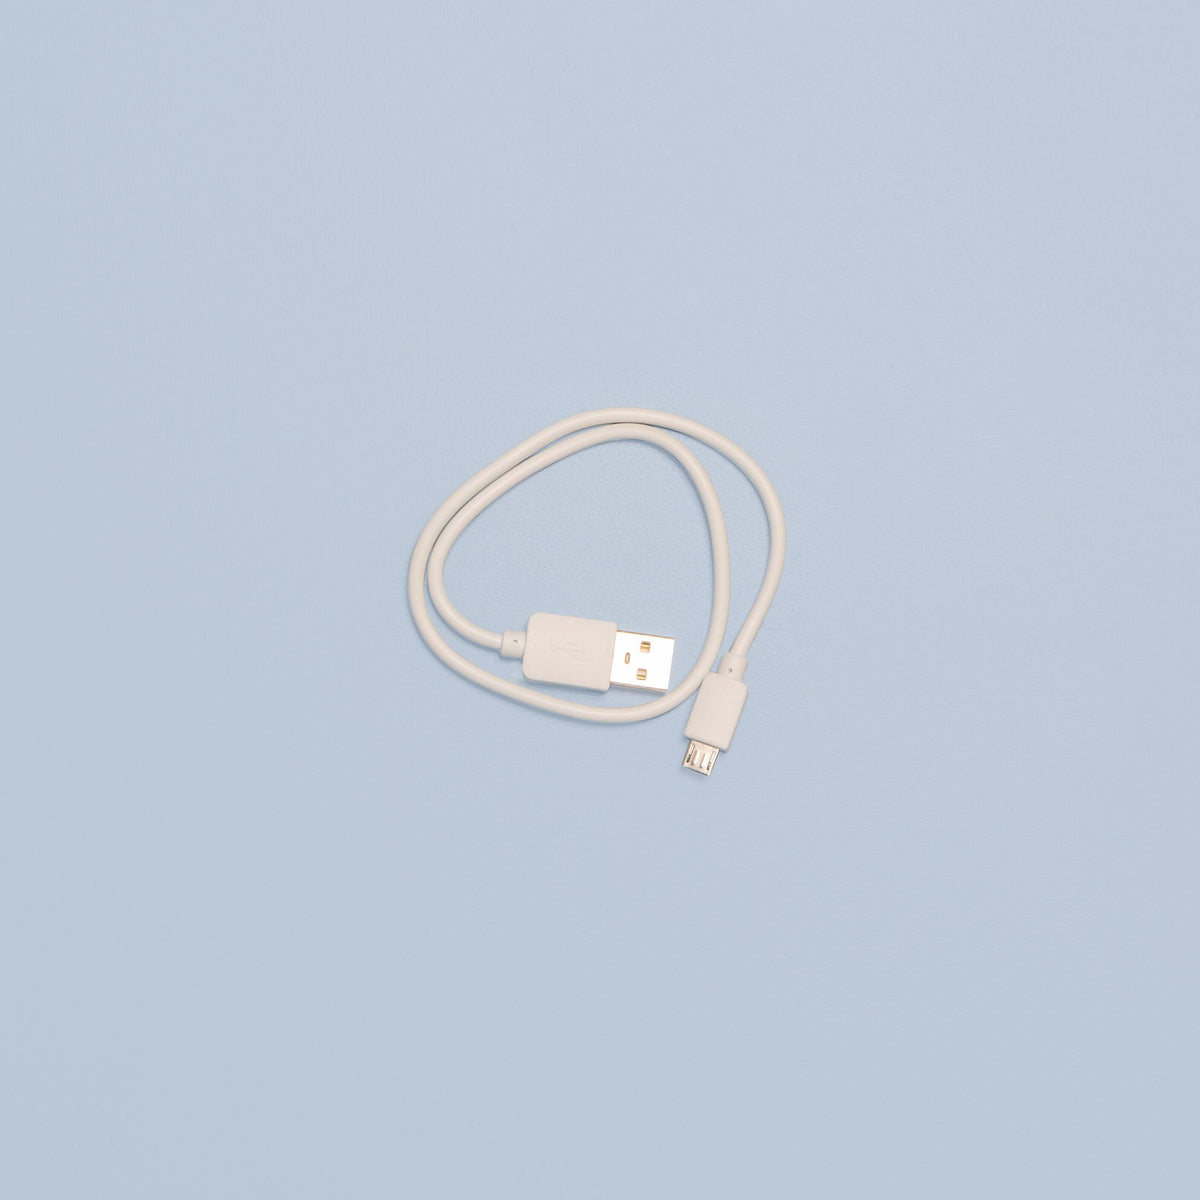 USB cable 40cm